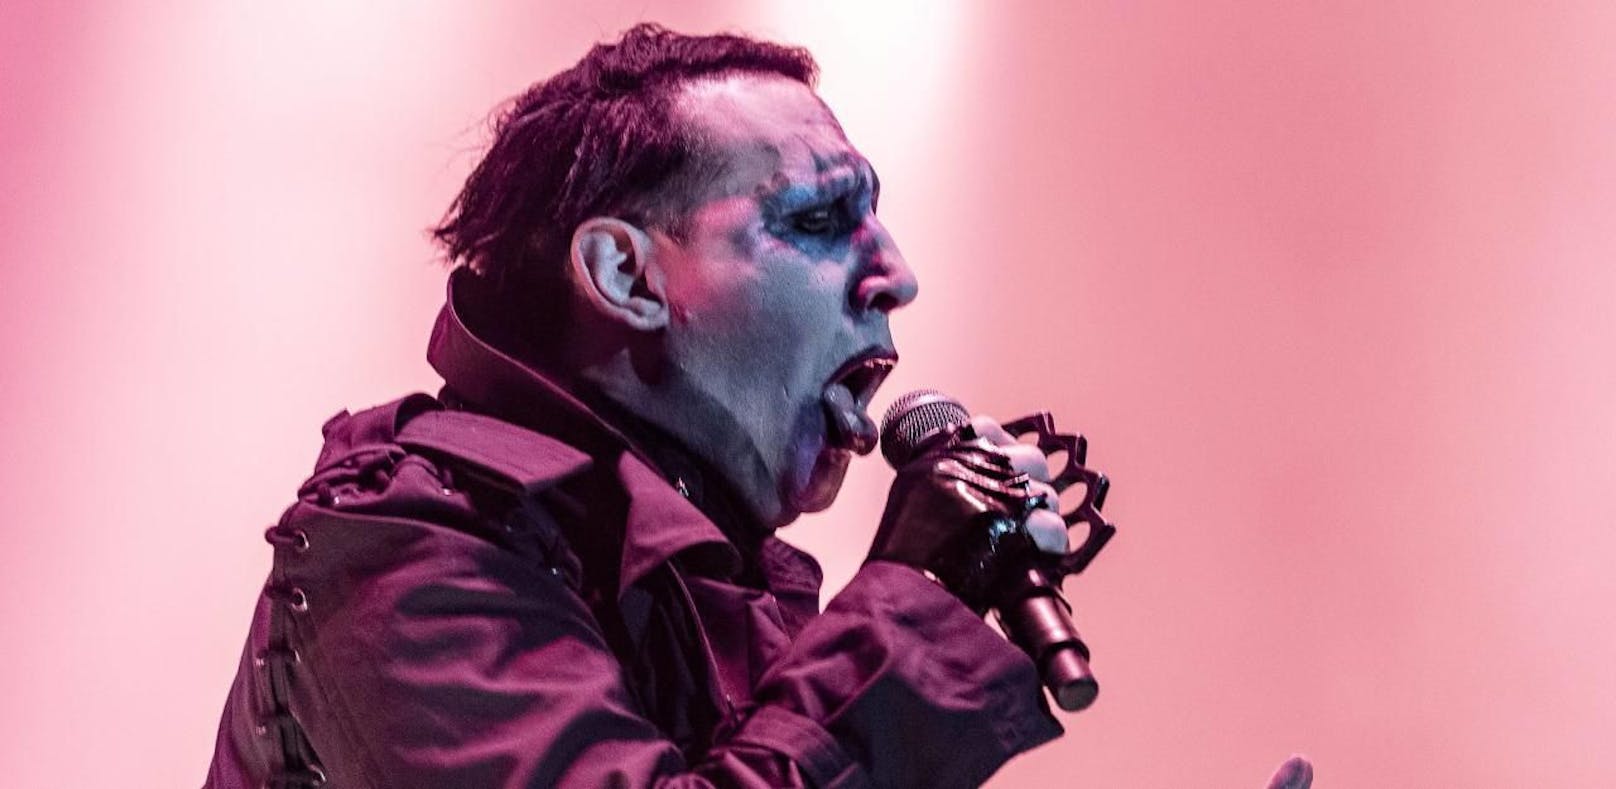 Marilyn Manson bedrohte Journalist mit Waffe